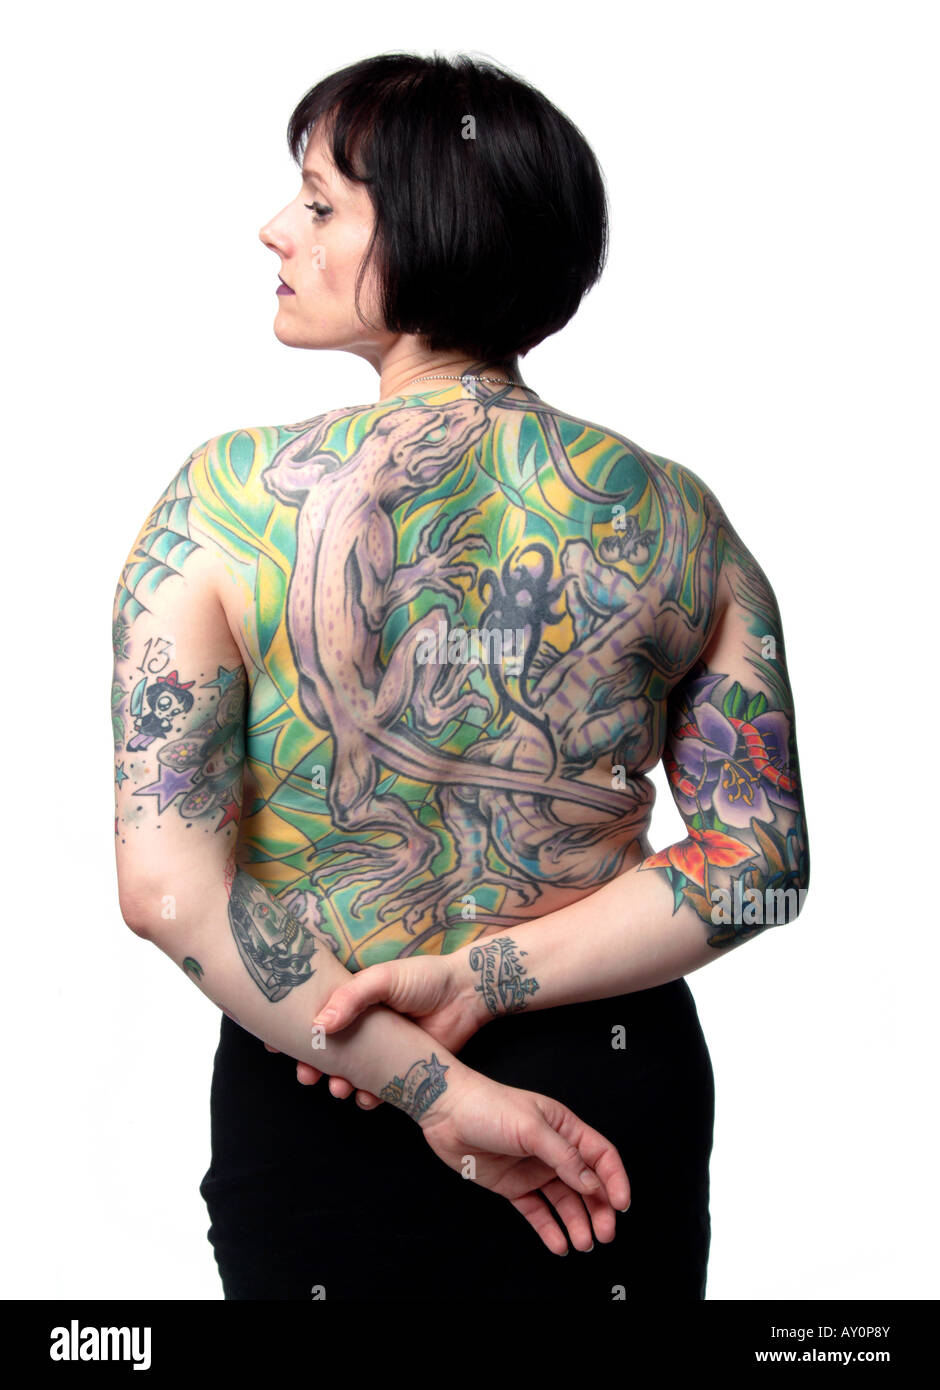 Heavily tattooed woman's back. Stock Photo